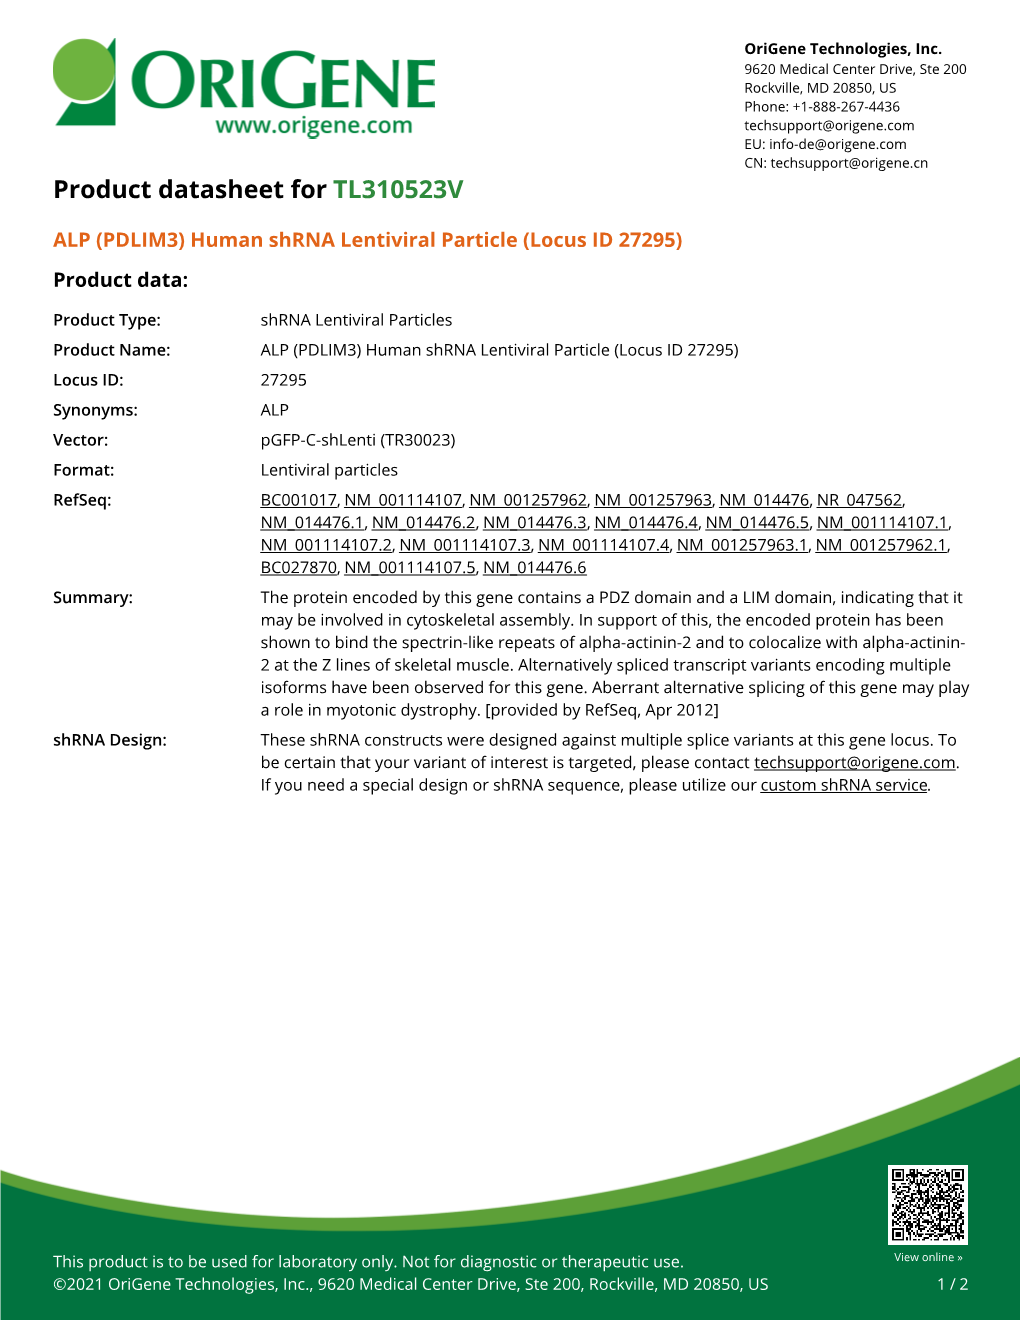 ALP (PDLIM3) Human Shrna Lentiviral Particle (Locus ID 27295) Product Data